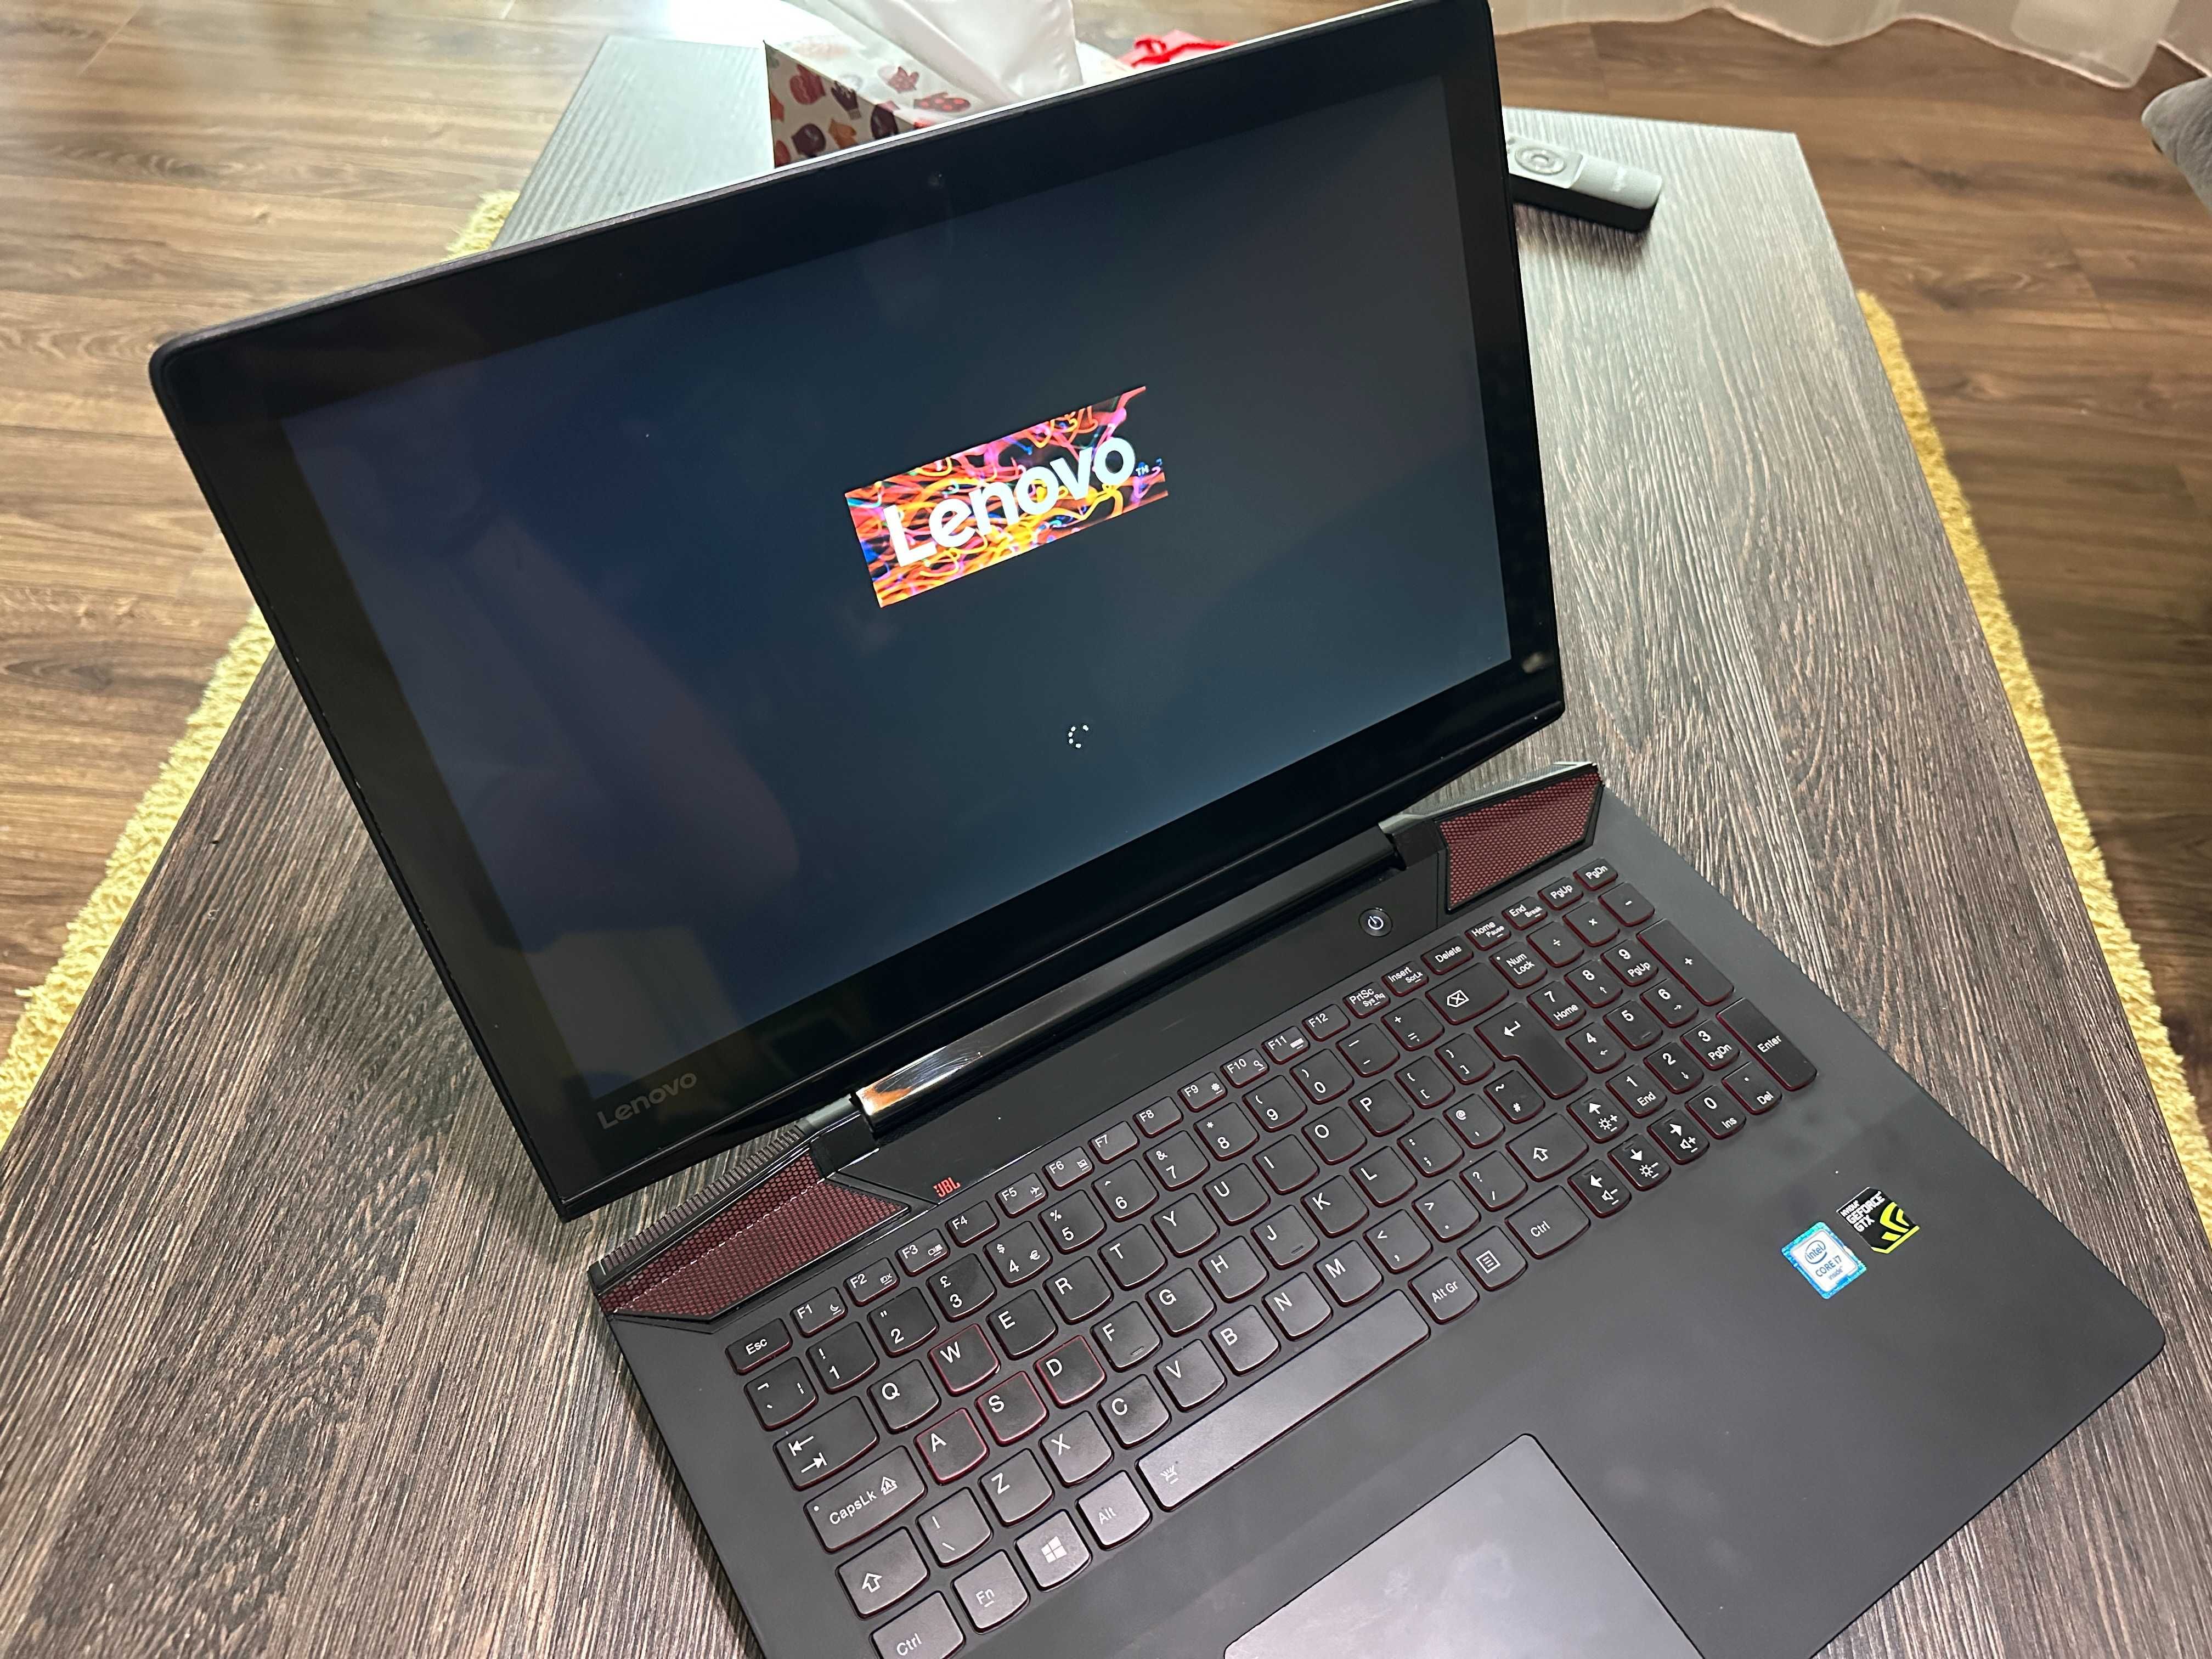 Laptop Gaming Lenovo Y700 i7, GTX970M